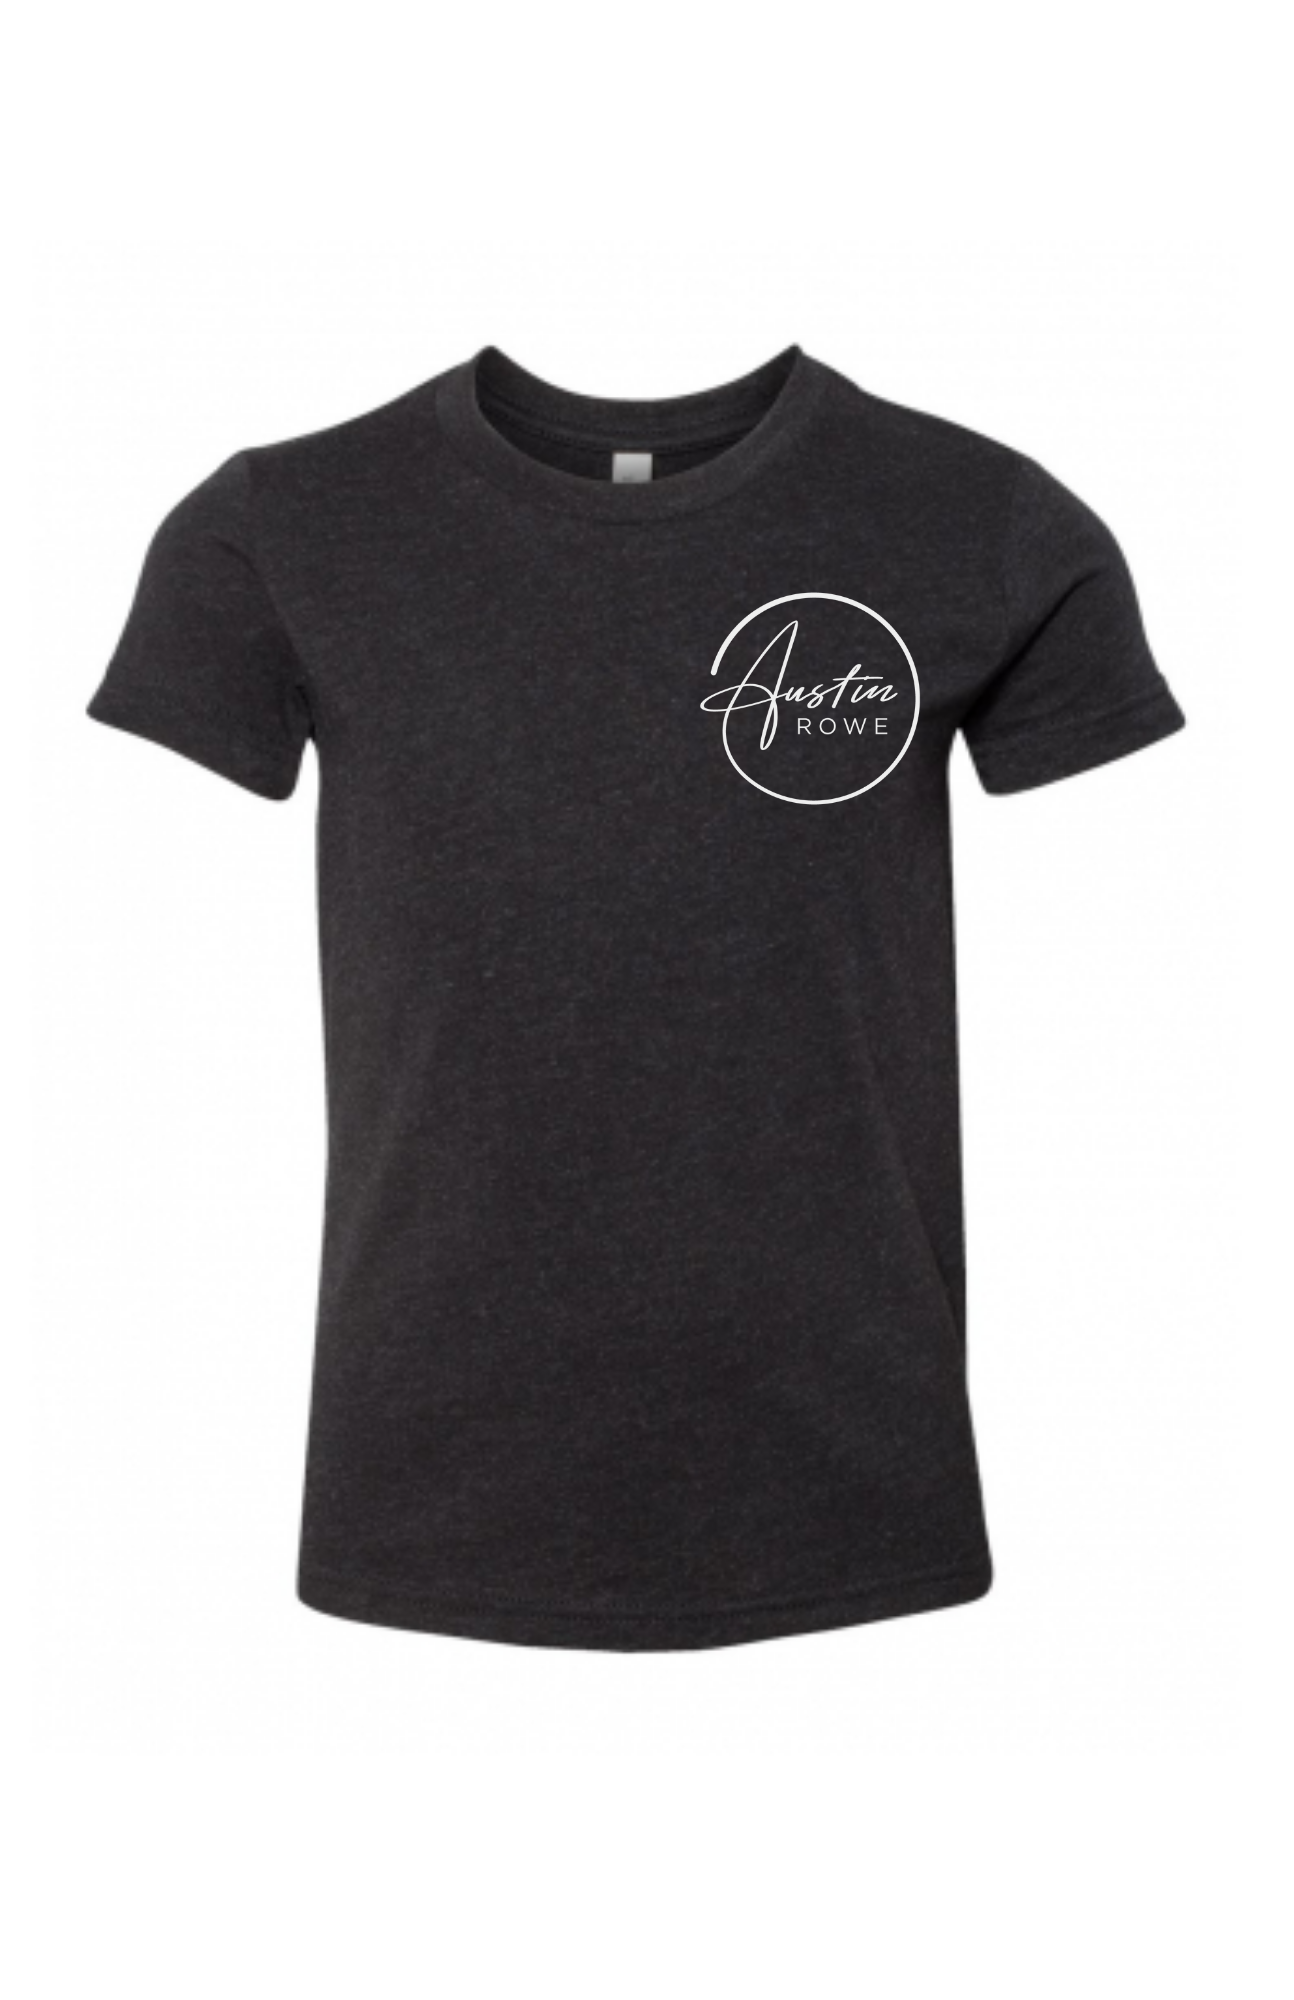 Austin Rowe T-Shirt (Youth)